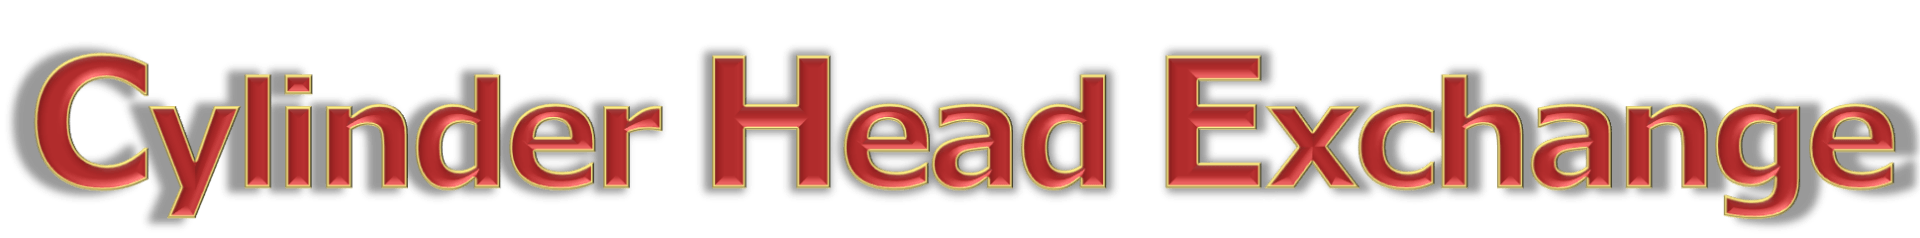 Cylinder Head Exchange - Logo